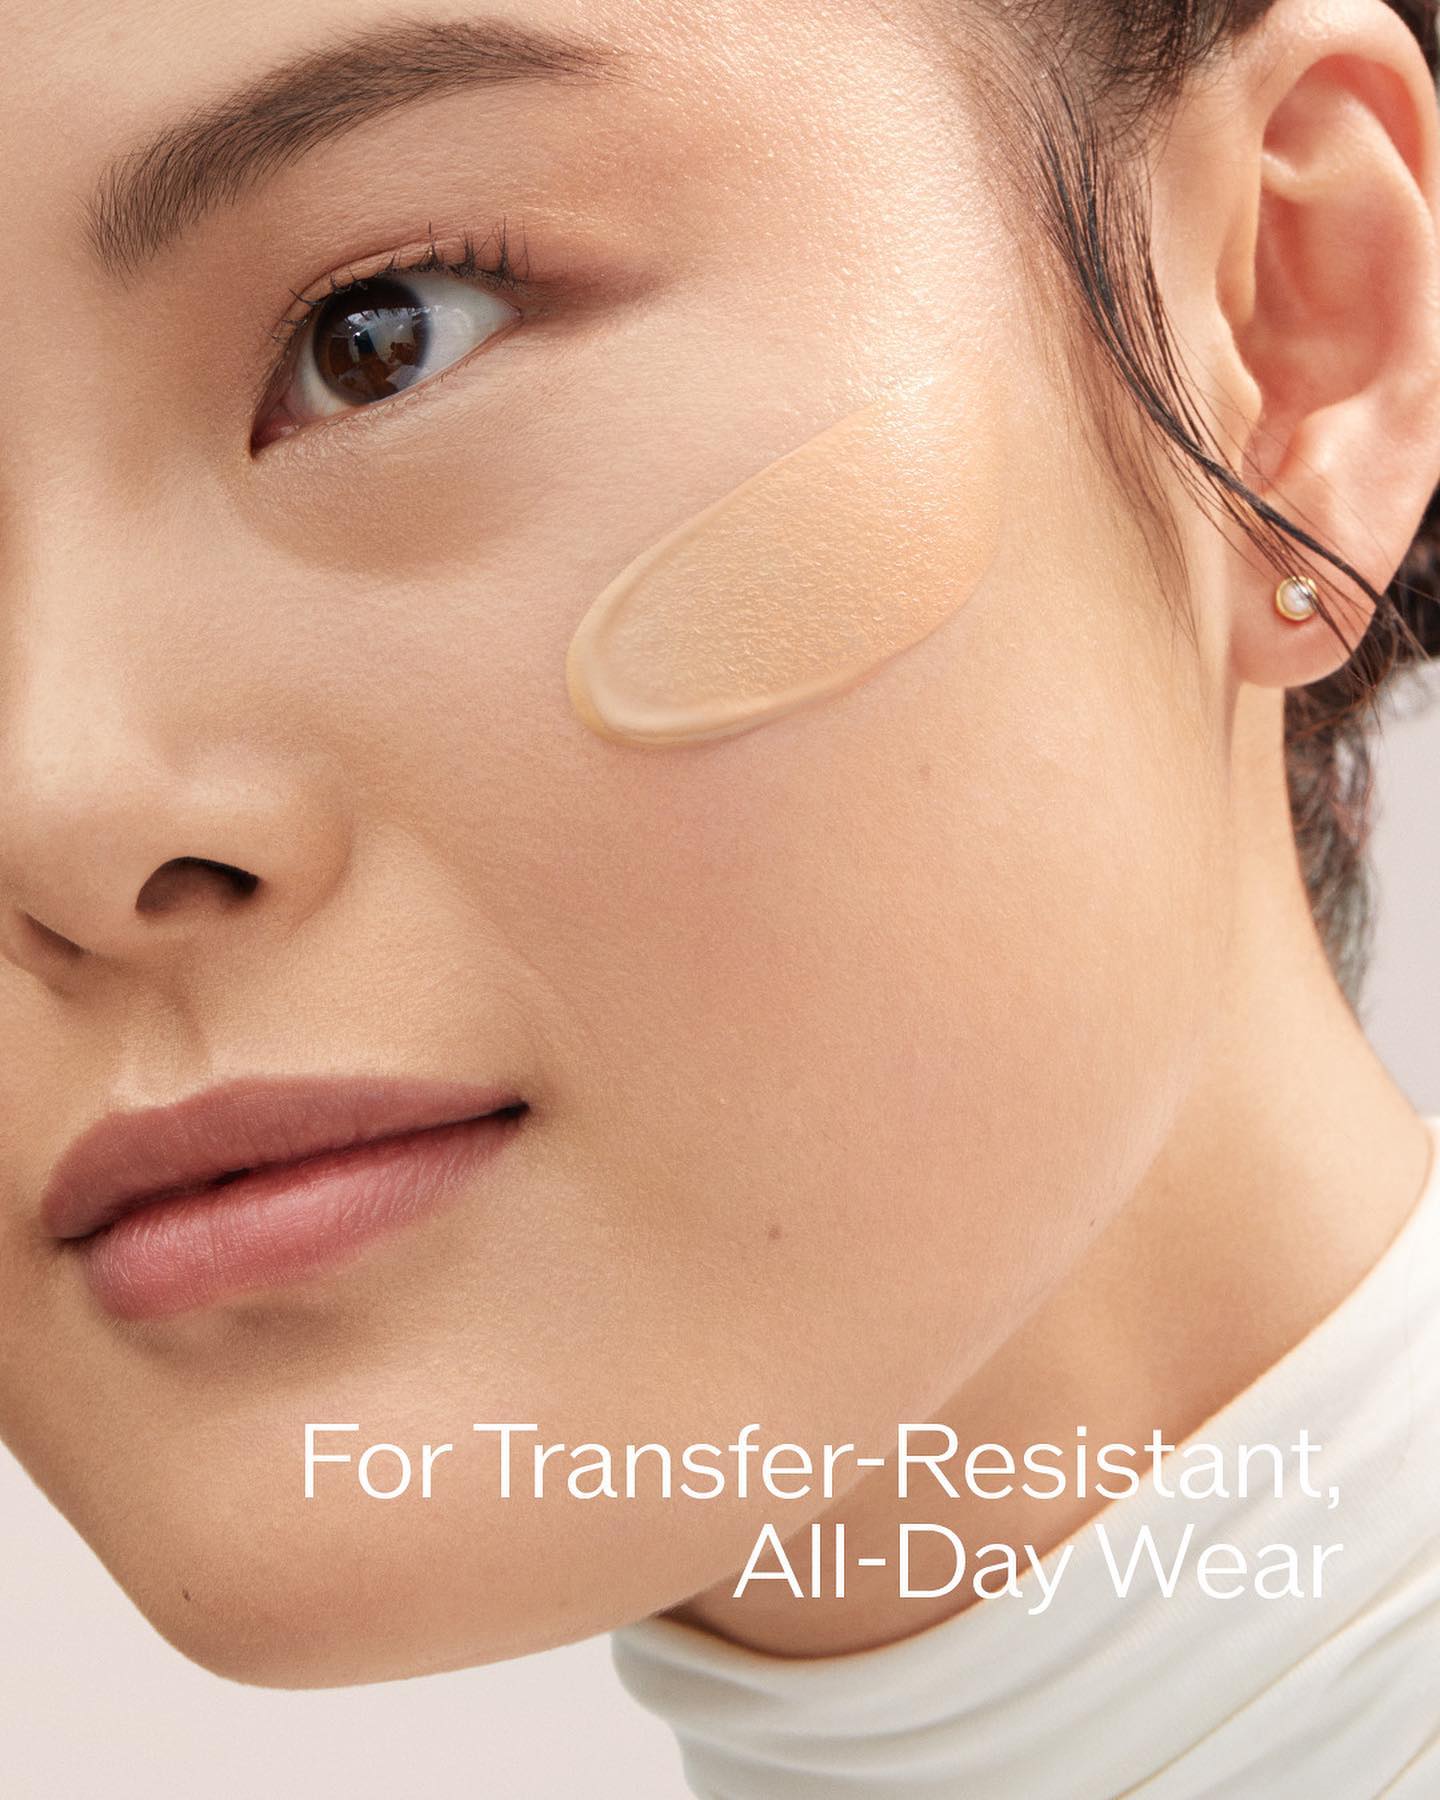 Kem Nền Shiseido Synchro Skin Self-Refreshing Foundation - Kallos Vietnam